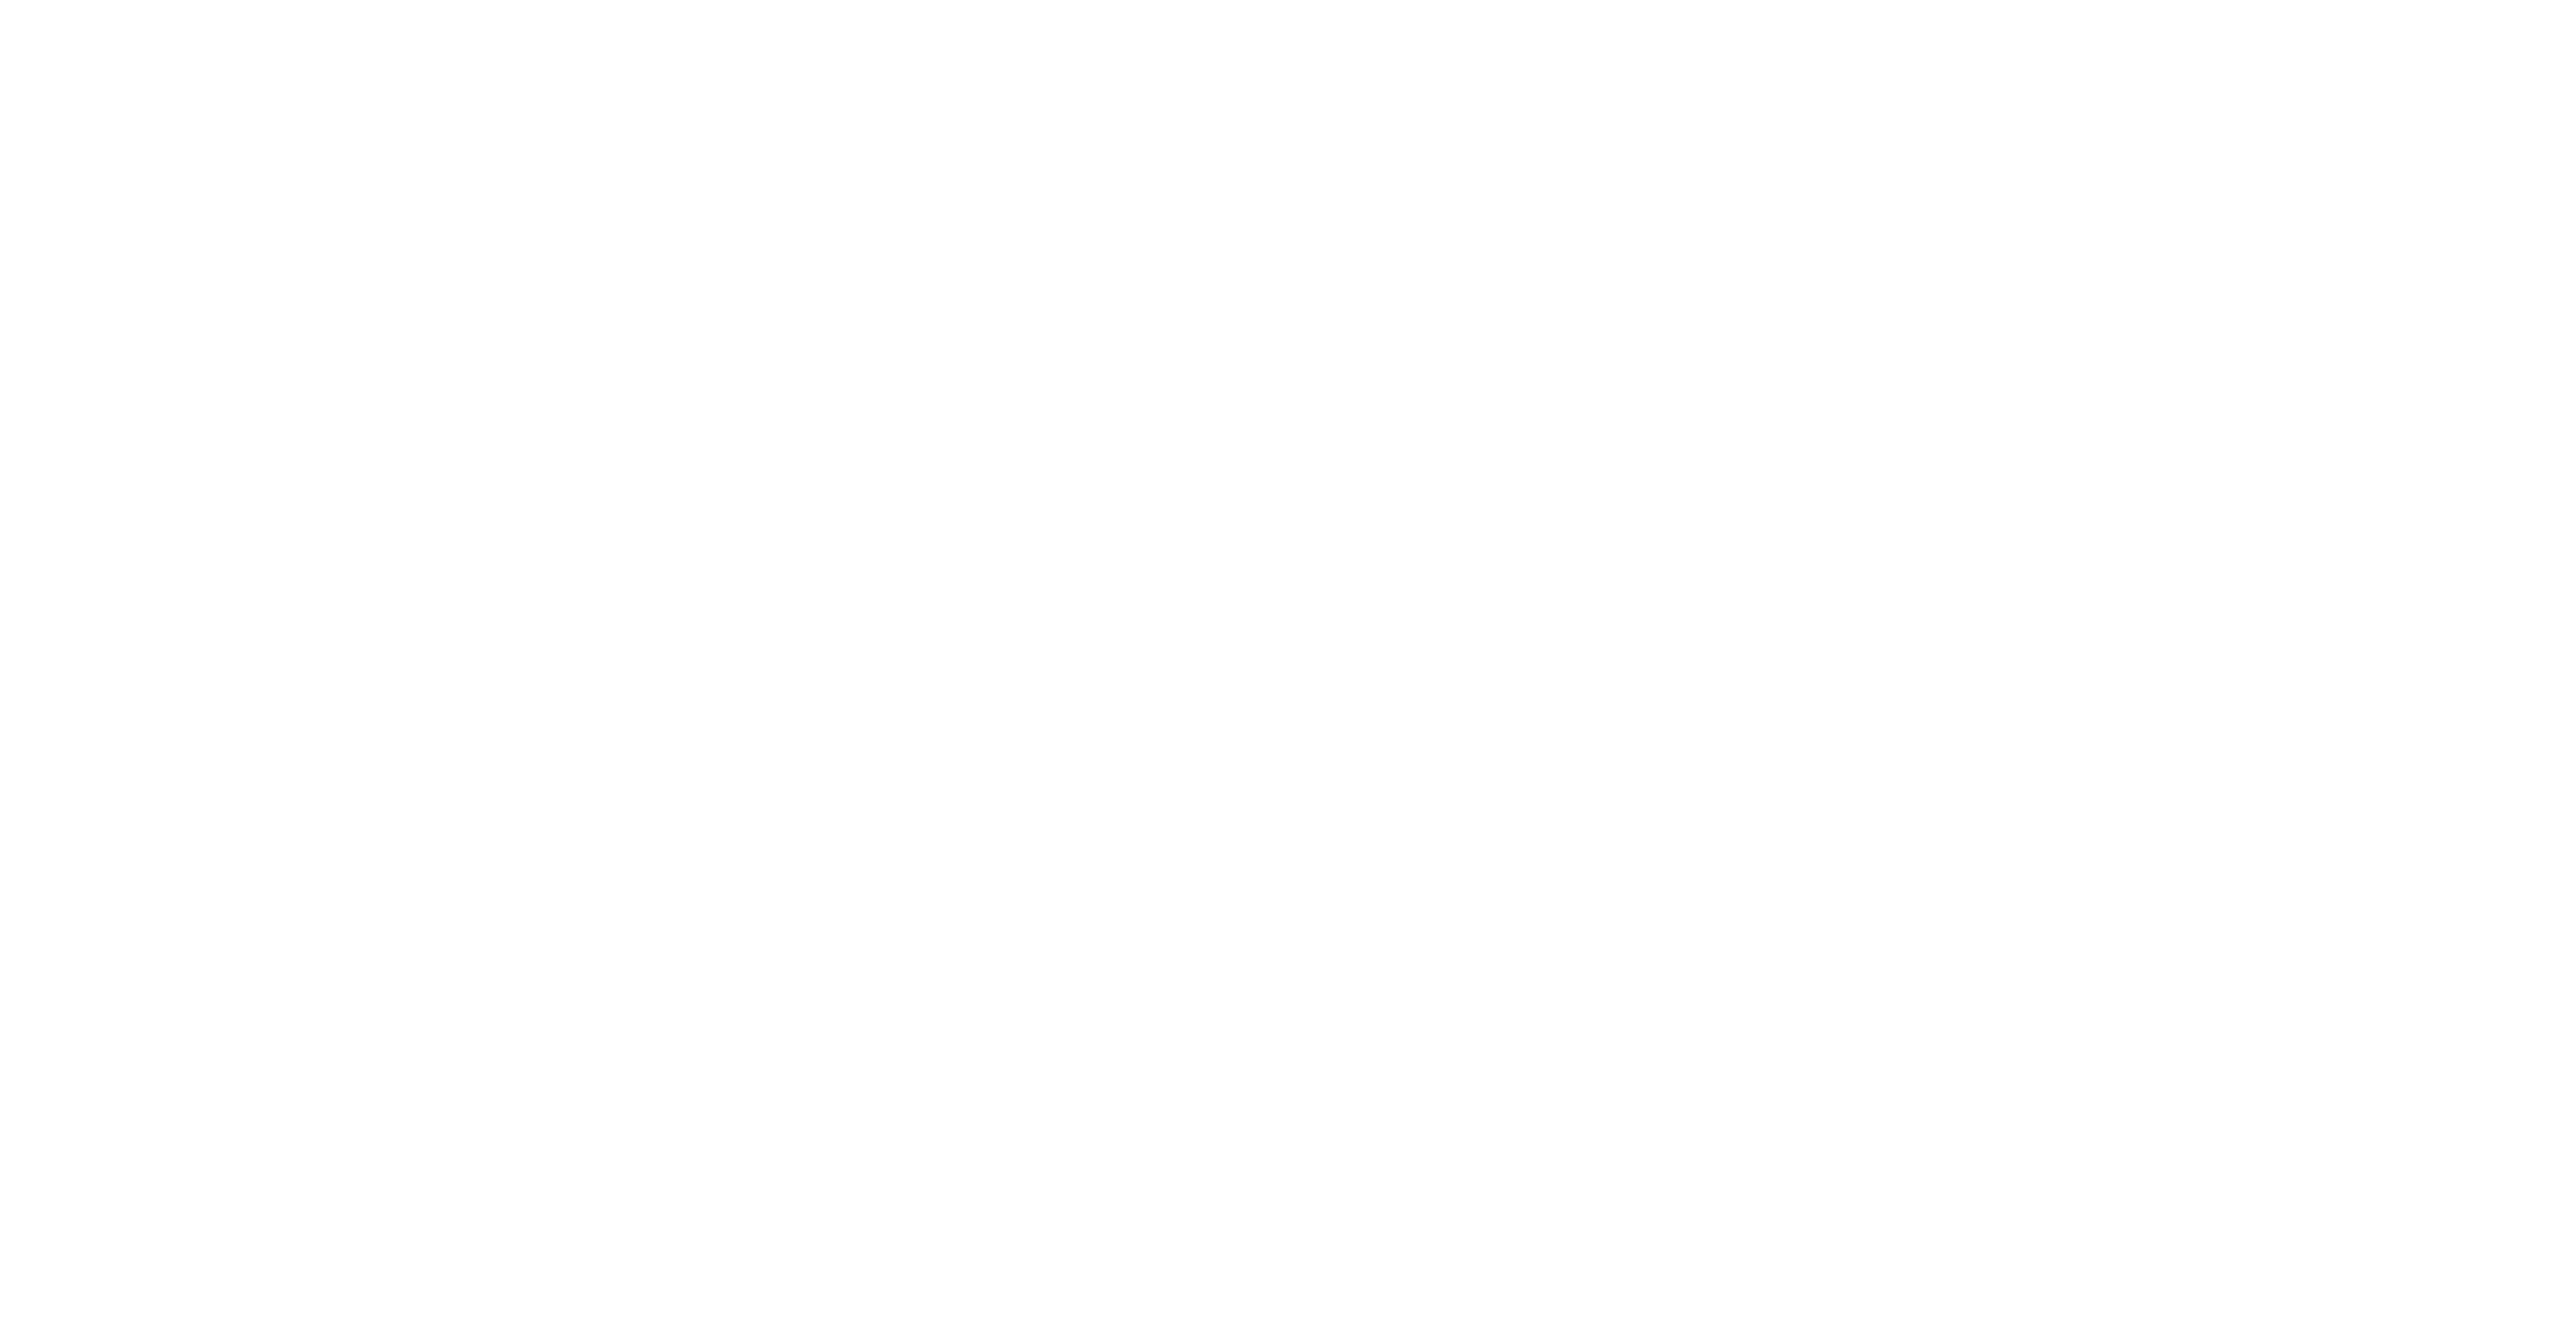 Metaspectral